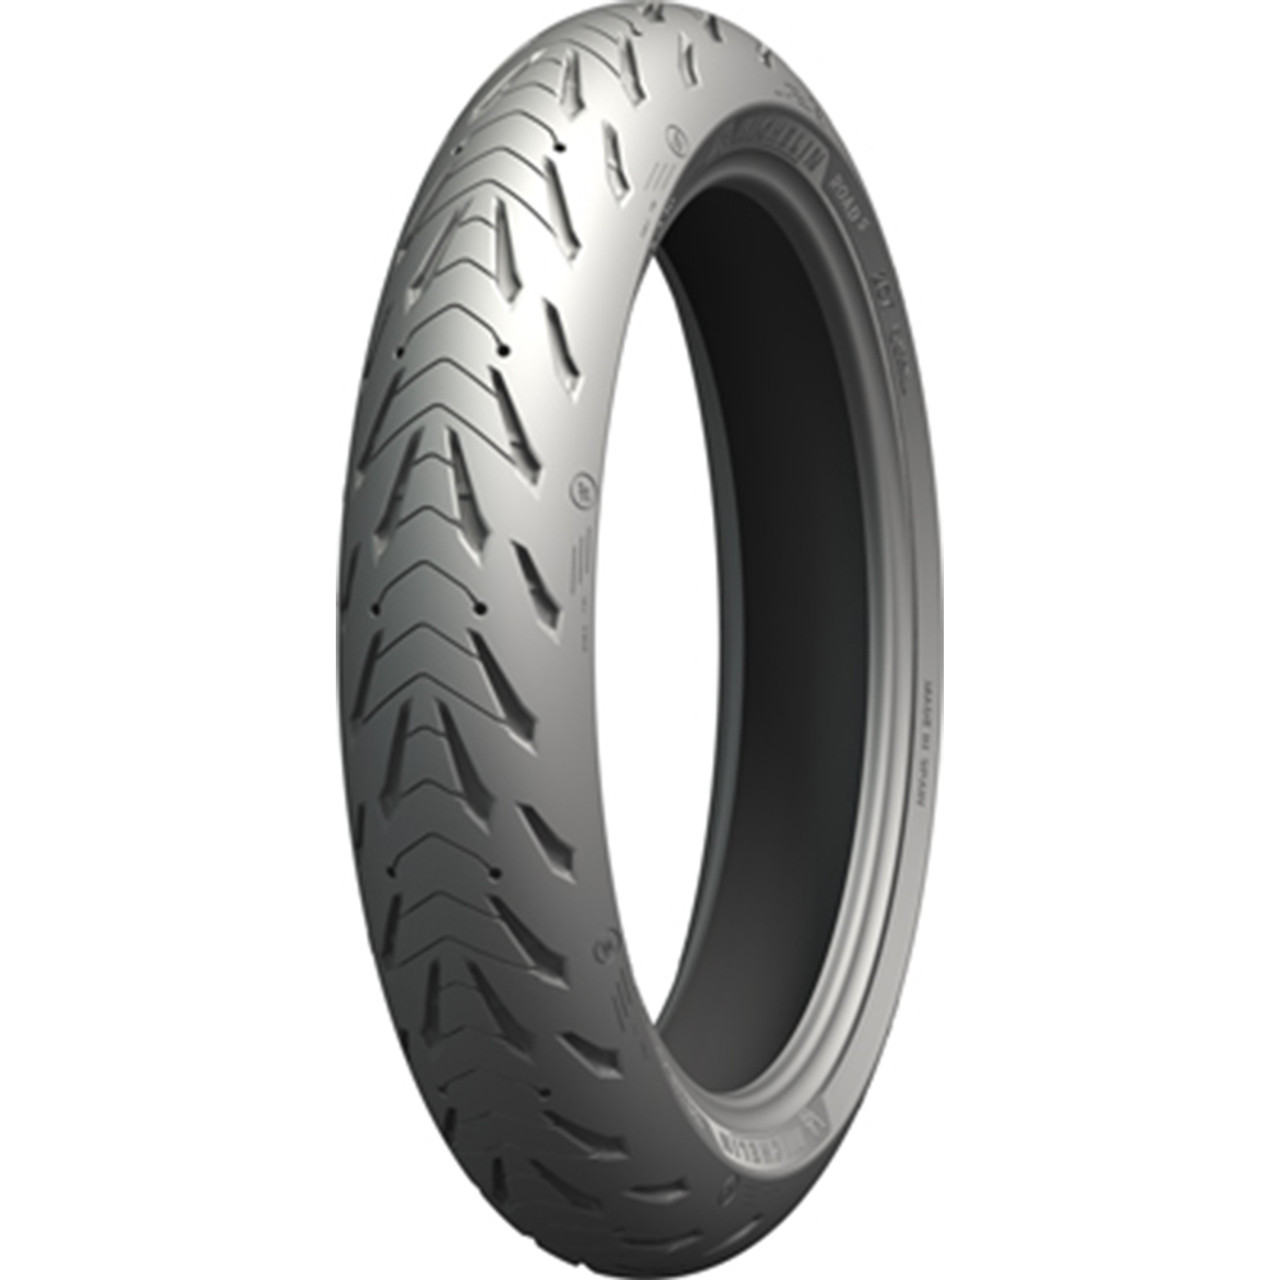 Michelin Road 5 Front Tires - Sportbike Track Gear